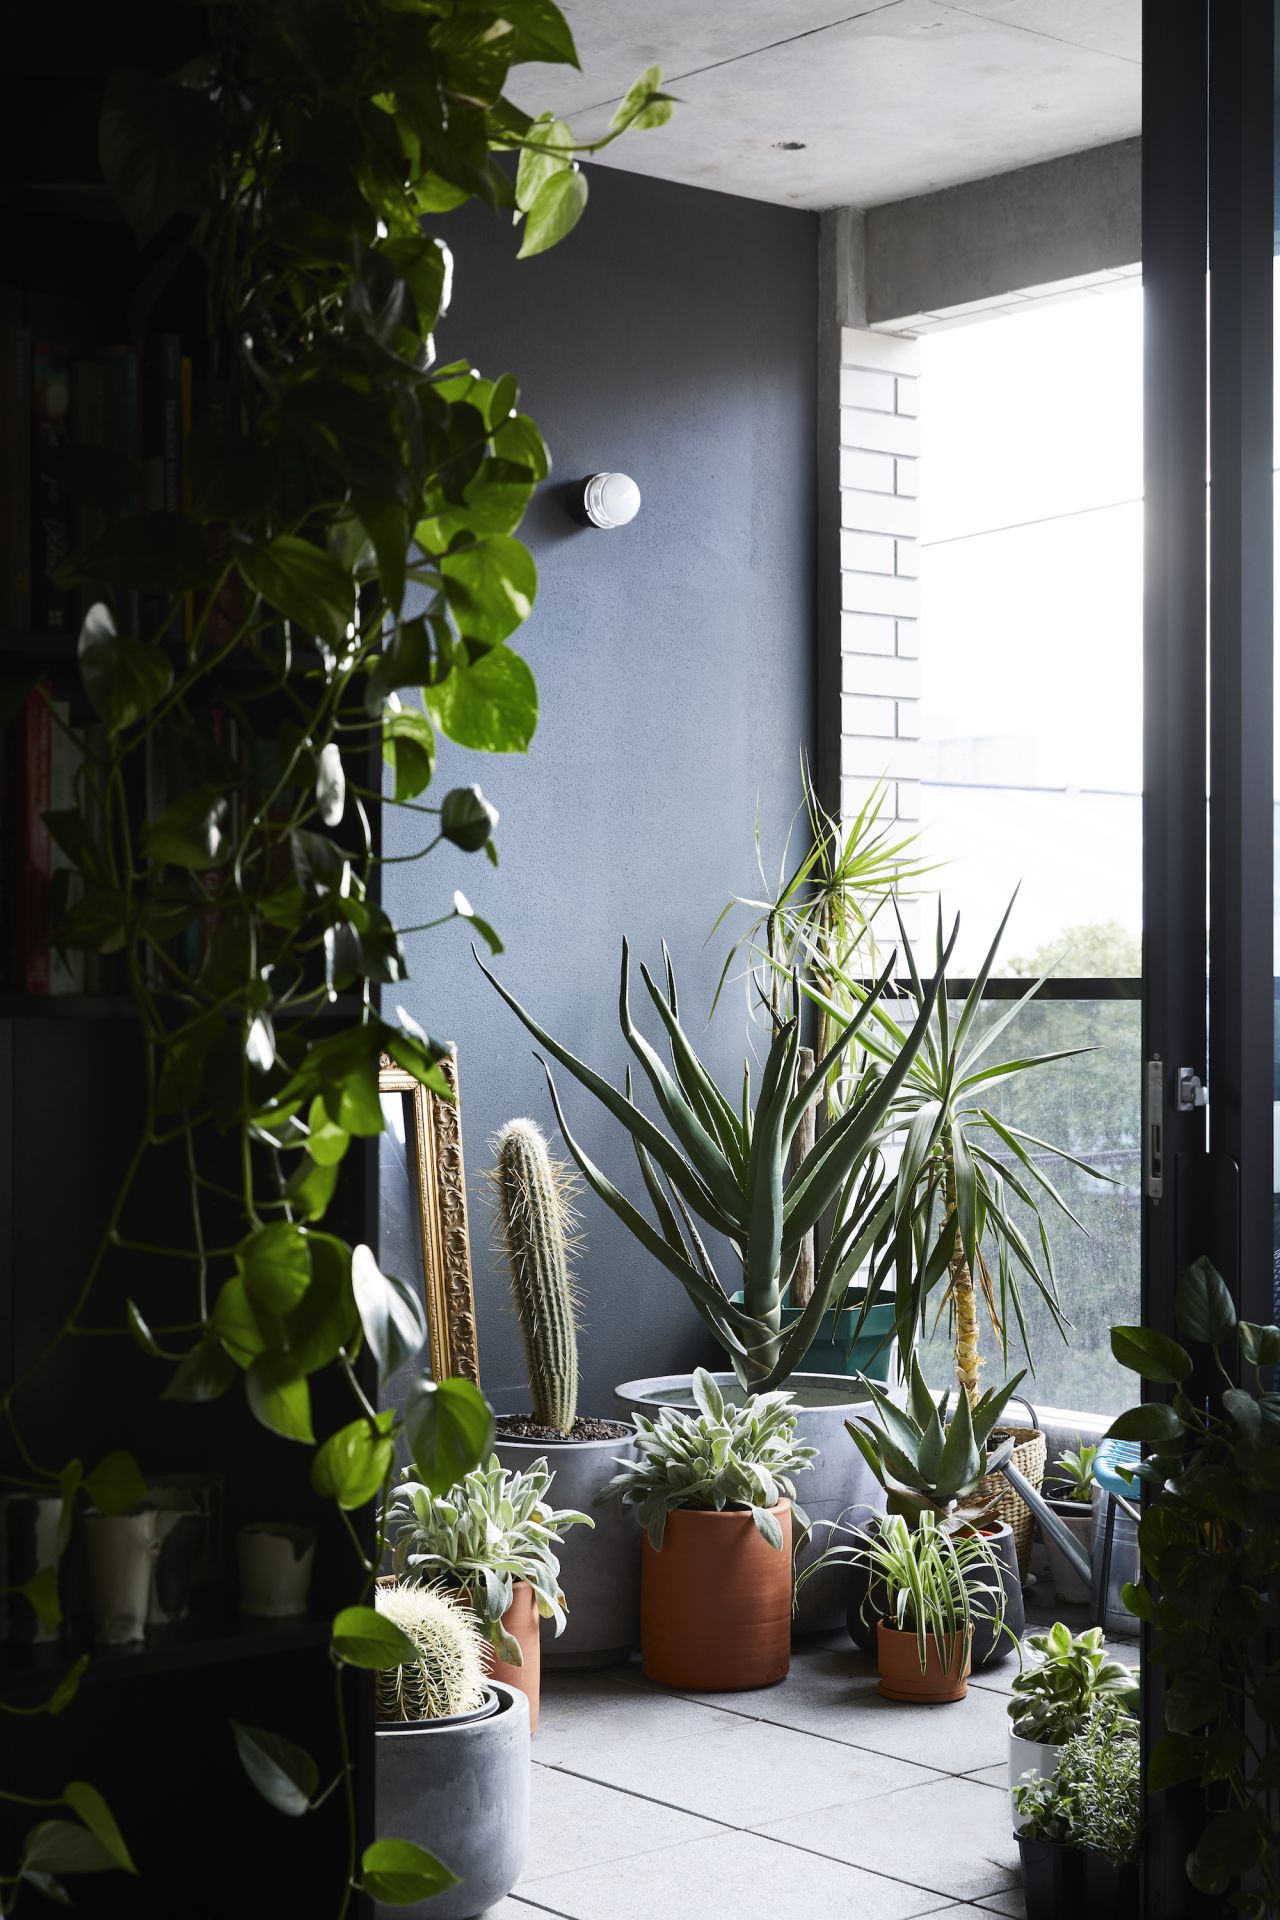 Indoor plants can help revitalize | CNN